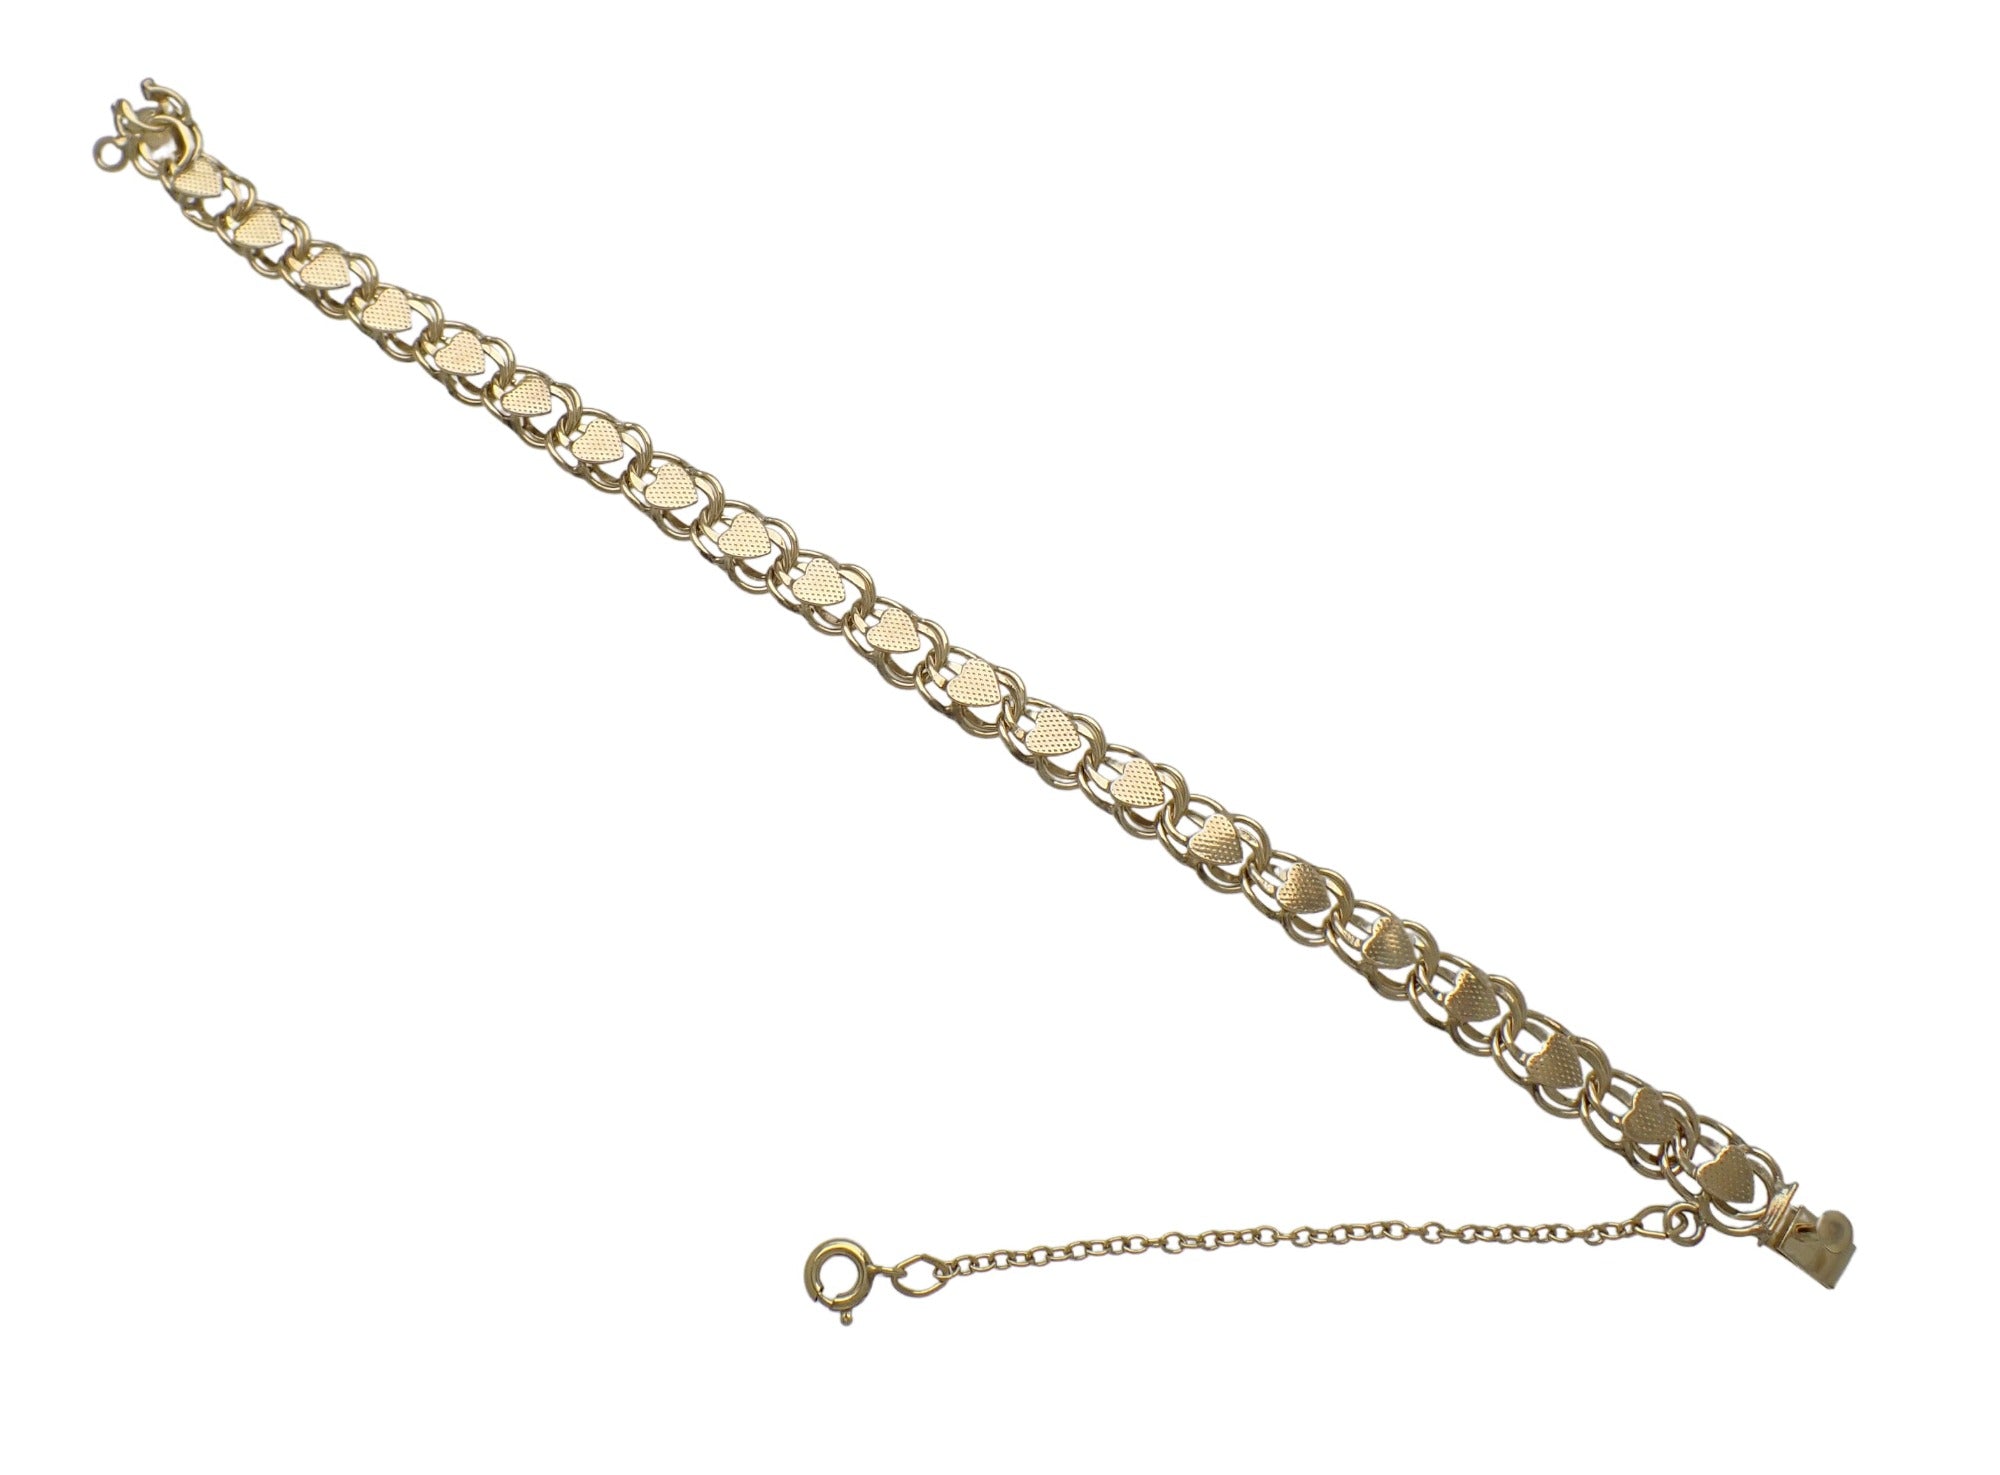 Vintage Gold Filled Charm Bracelet Football Basketball Name Charms 6 3/4''  16g